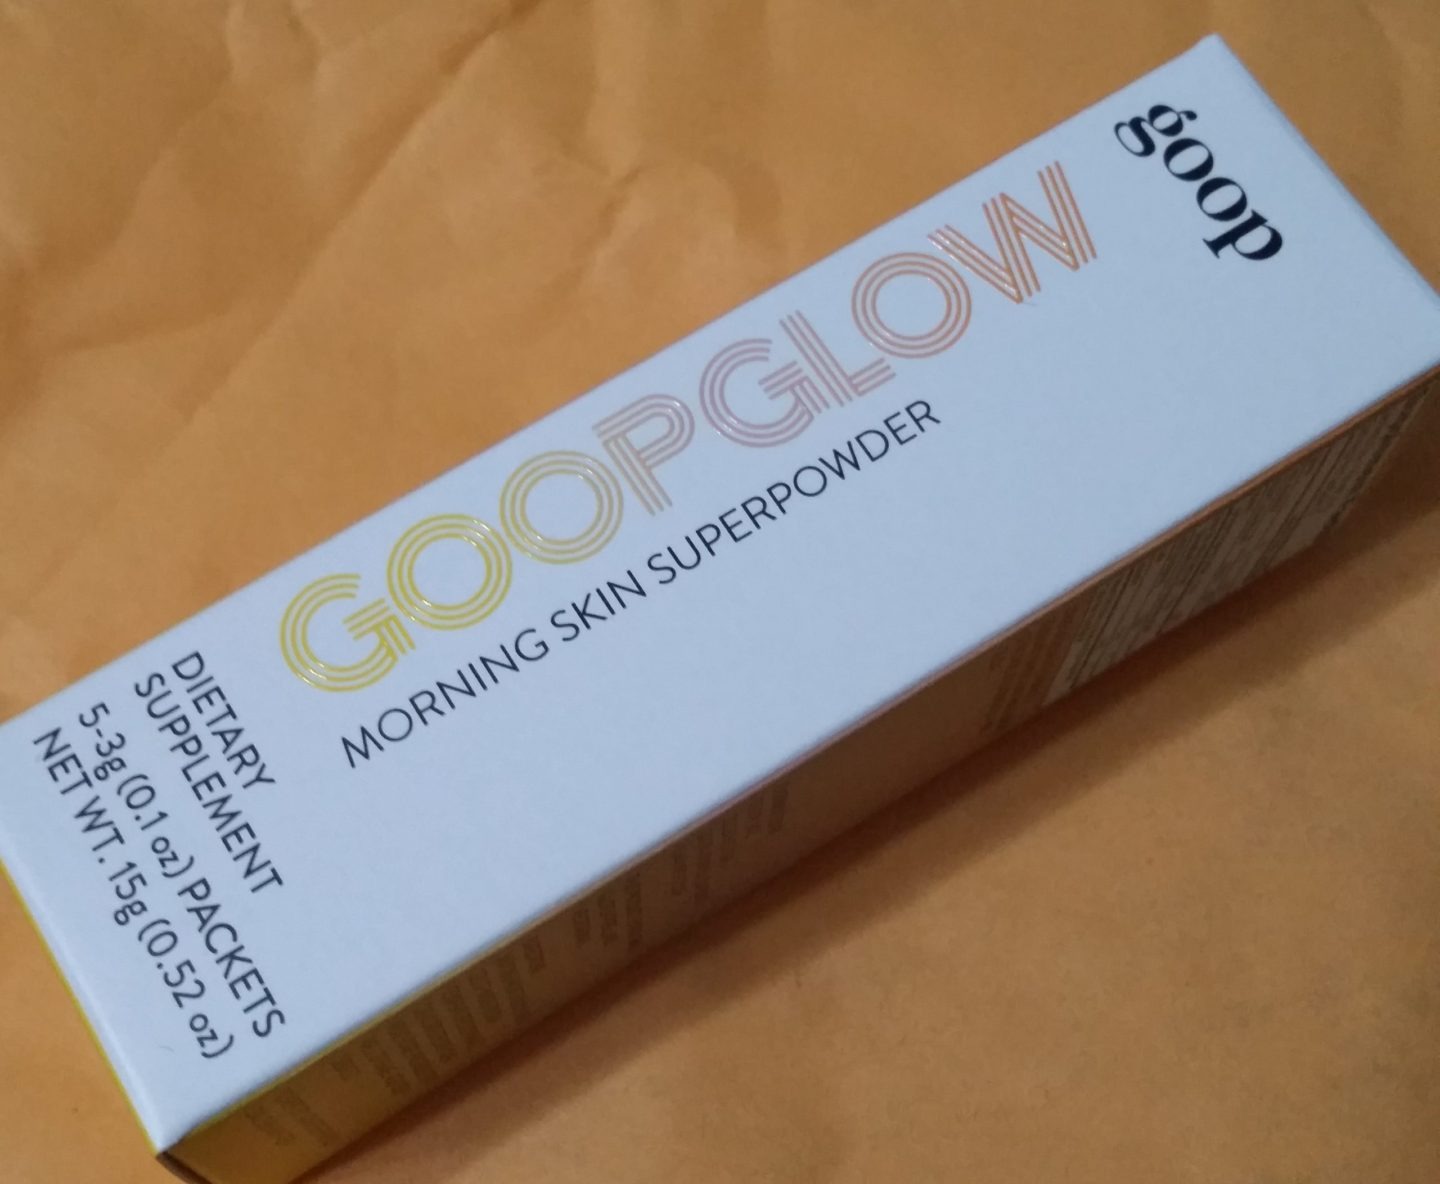 Goop Glow Morning Skin Super powder product box